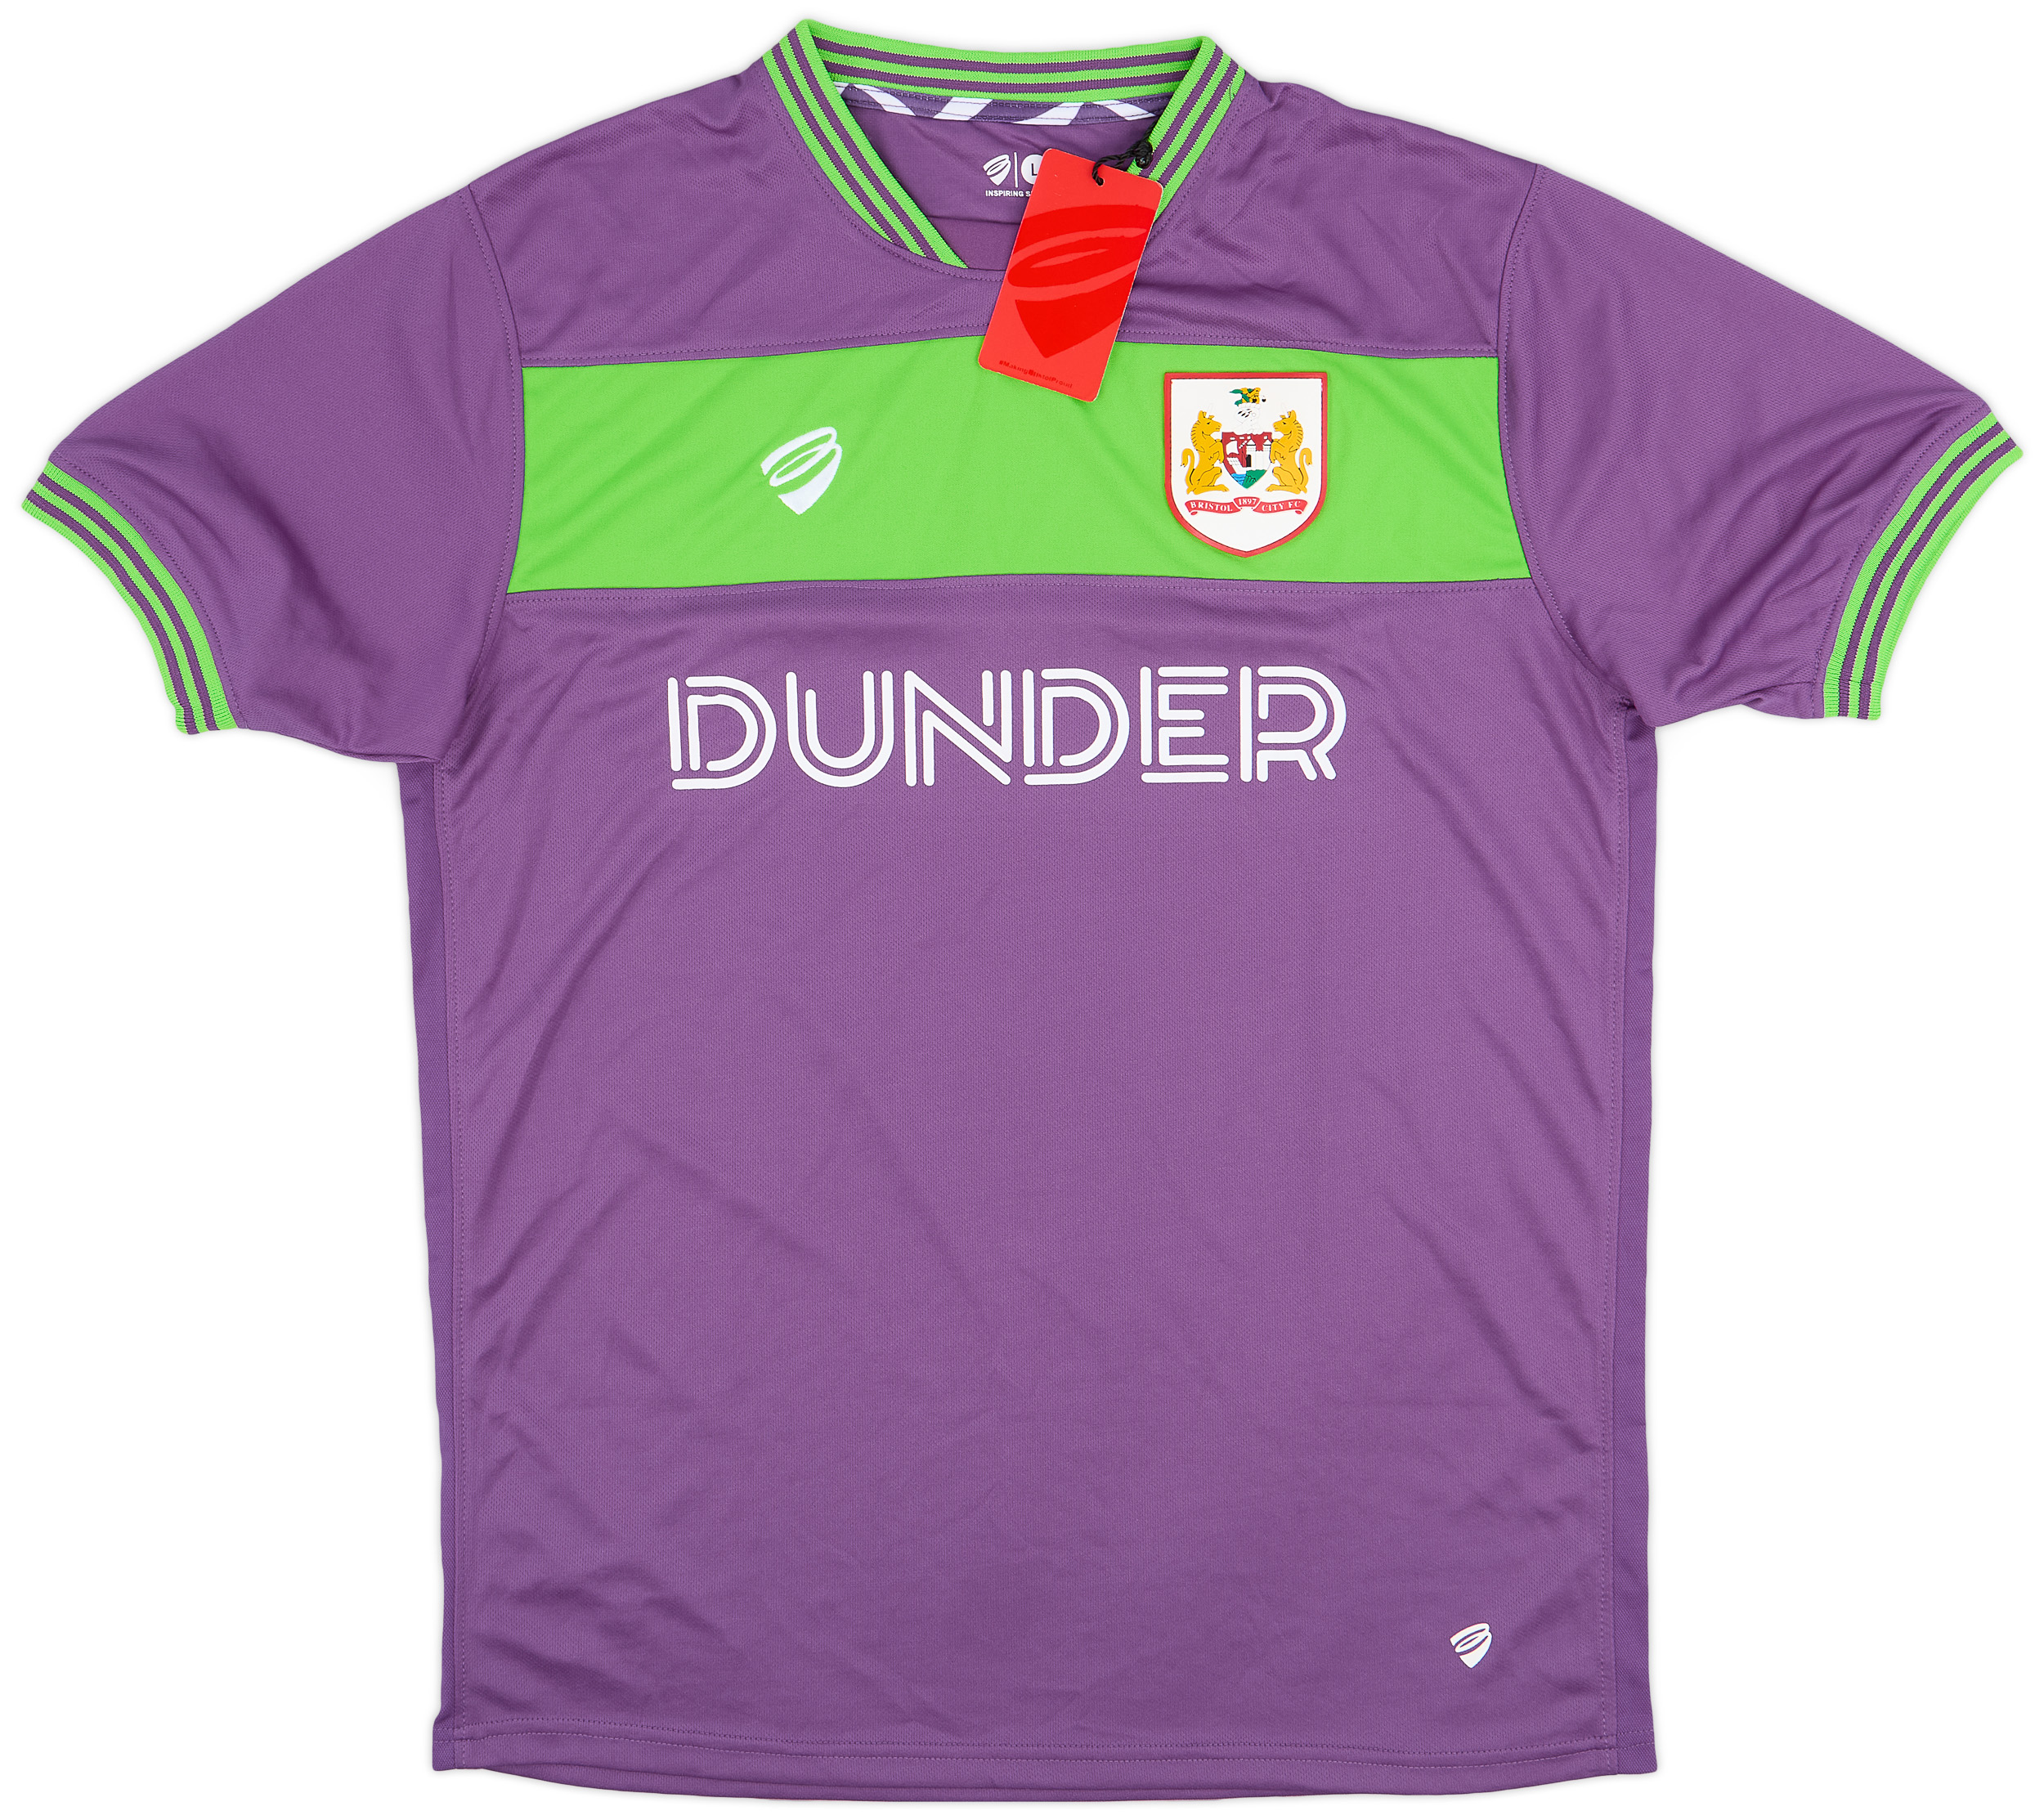 Bristol City  Derden  shirt  (Original)